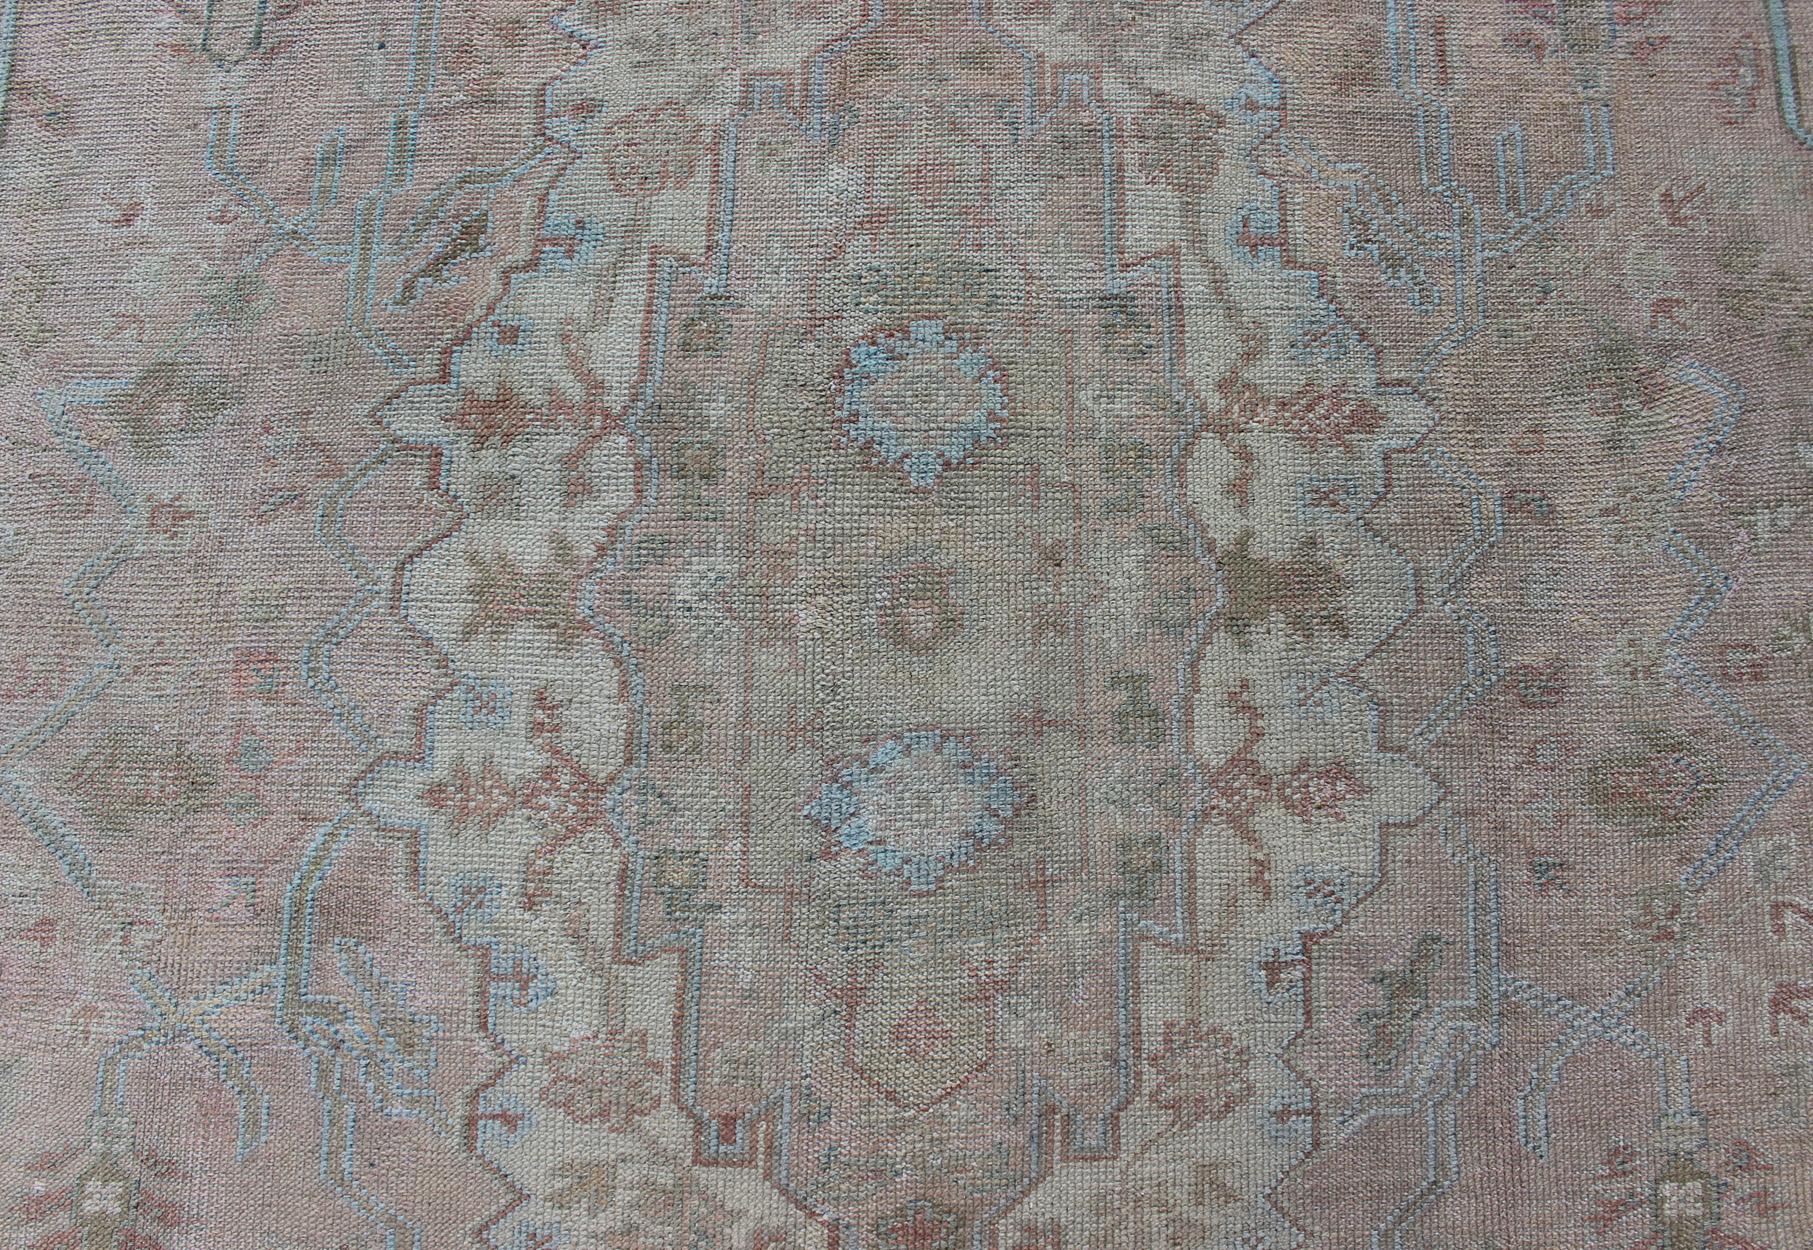 Large Antique Oushak Carpet in Light Pink Background with Light Blue Highlights For Sale 1